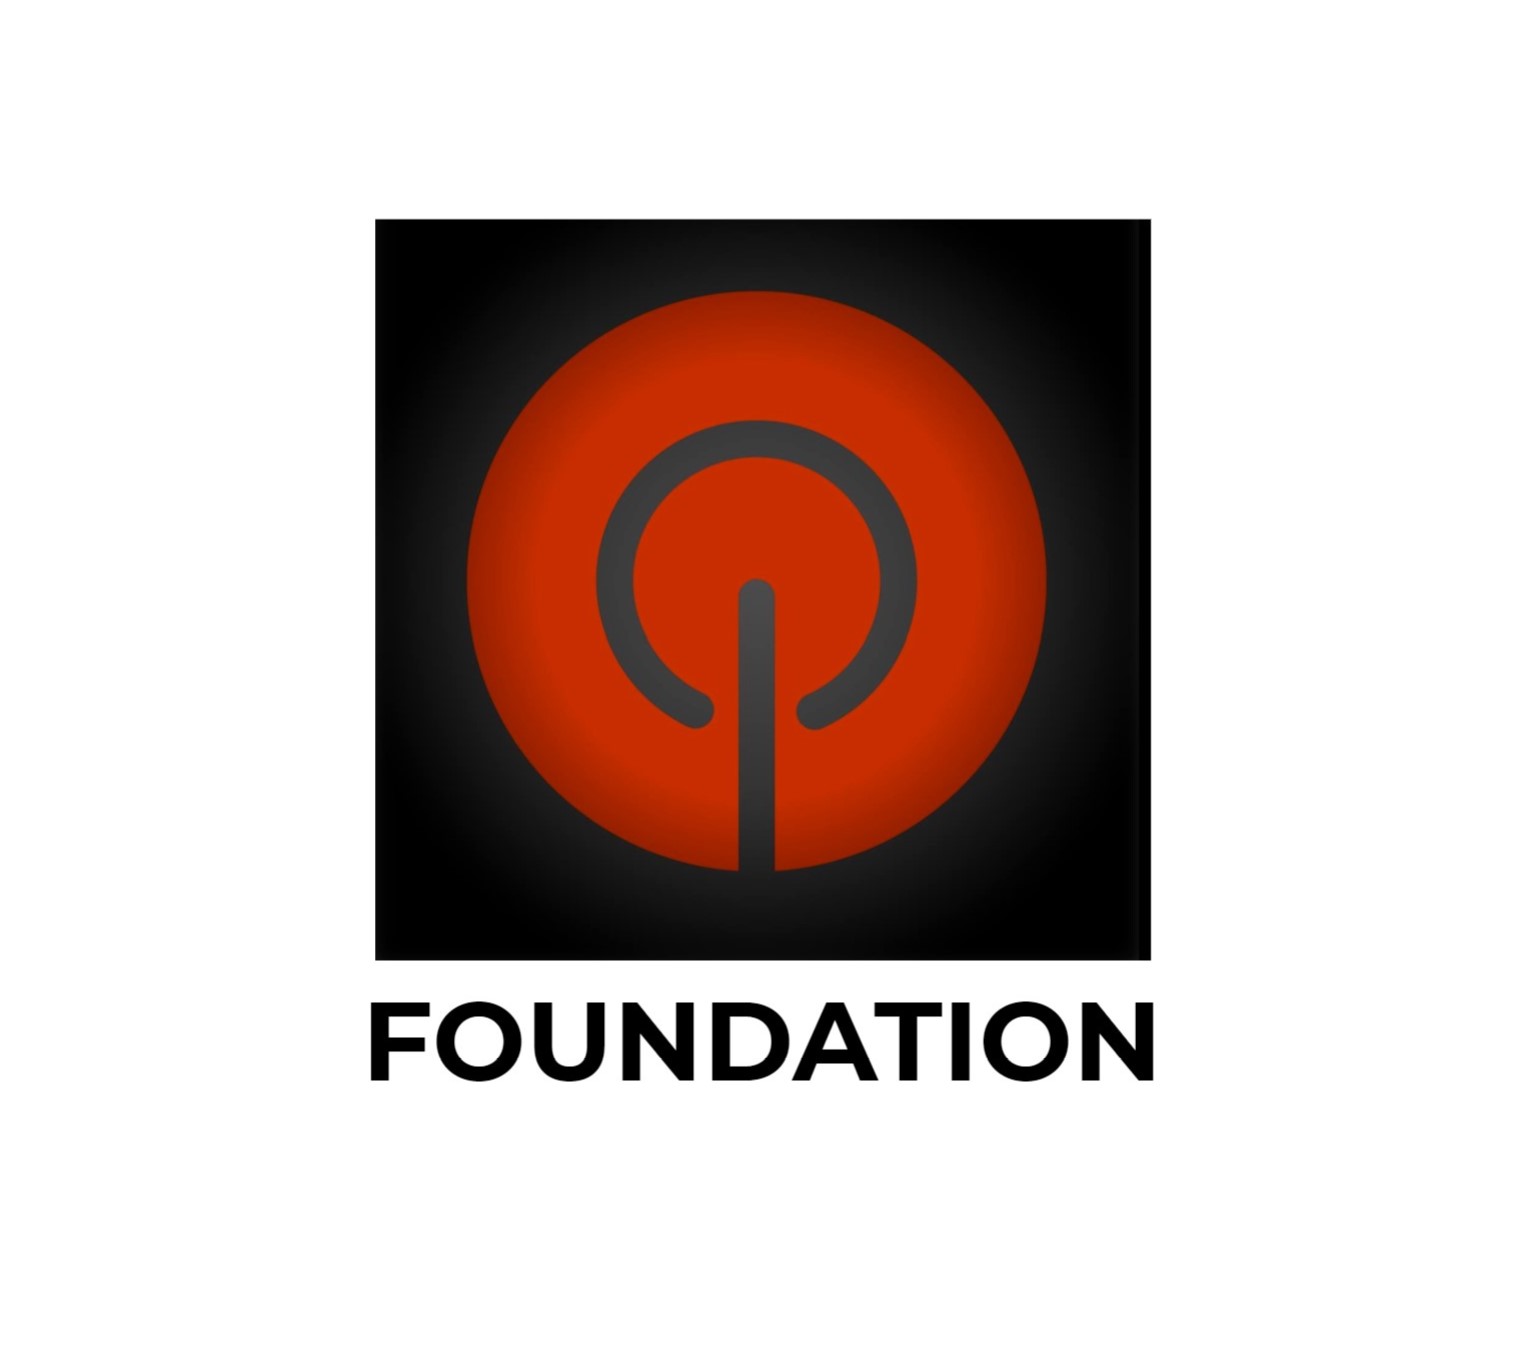 Q Foundation